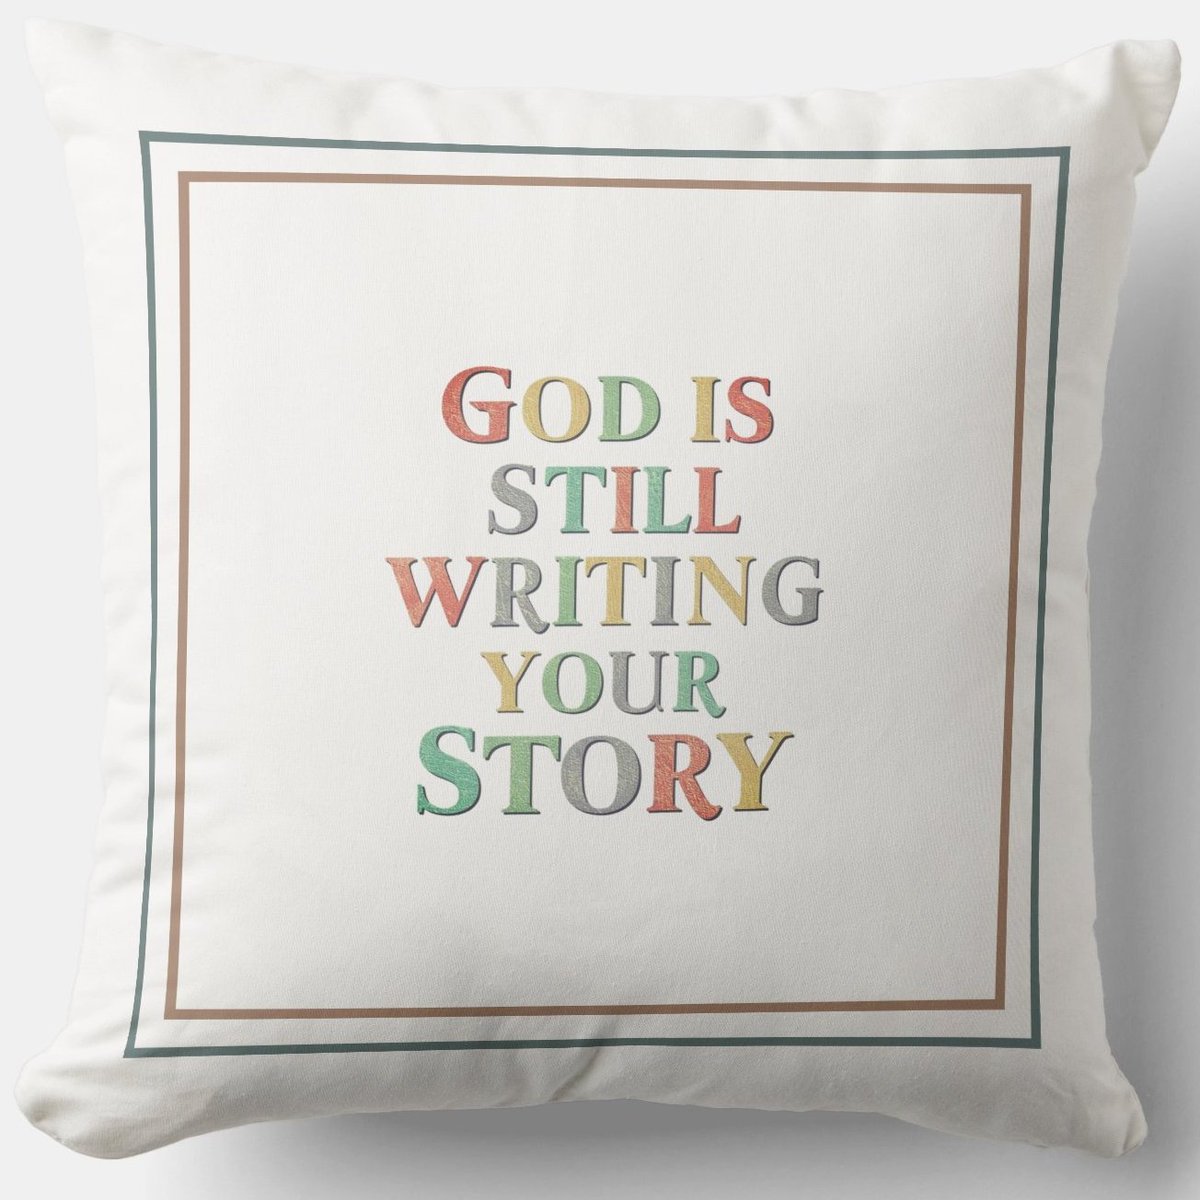 God Is Still Writing Your Story #Cushion zazzle.com/god_is_still_w… -- Throw #Pillow #Blessing #JesusChrist #JesusSaves #Jesus #christian #spiritual #Homedecoration #uniquegift #giftideas #MothersDayGifts #giftformom #giftidea #HolySpirit #pillows #giftshop #giftsforher #giftsformom